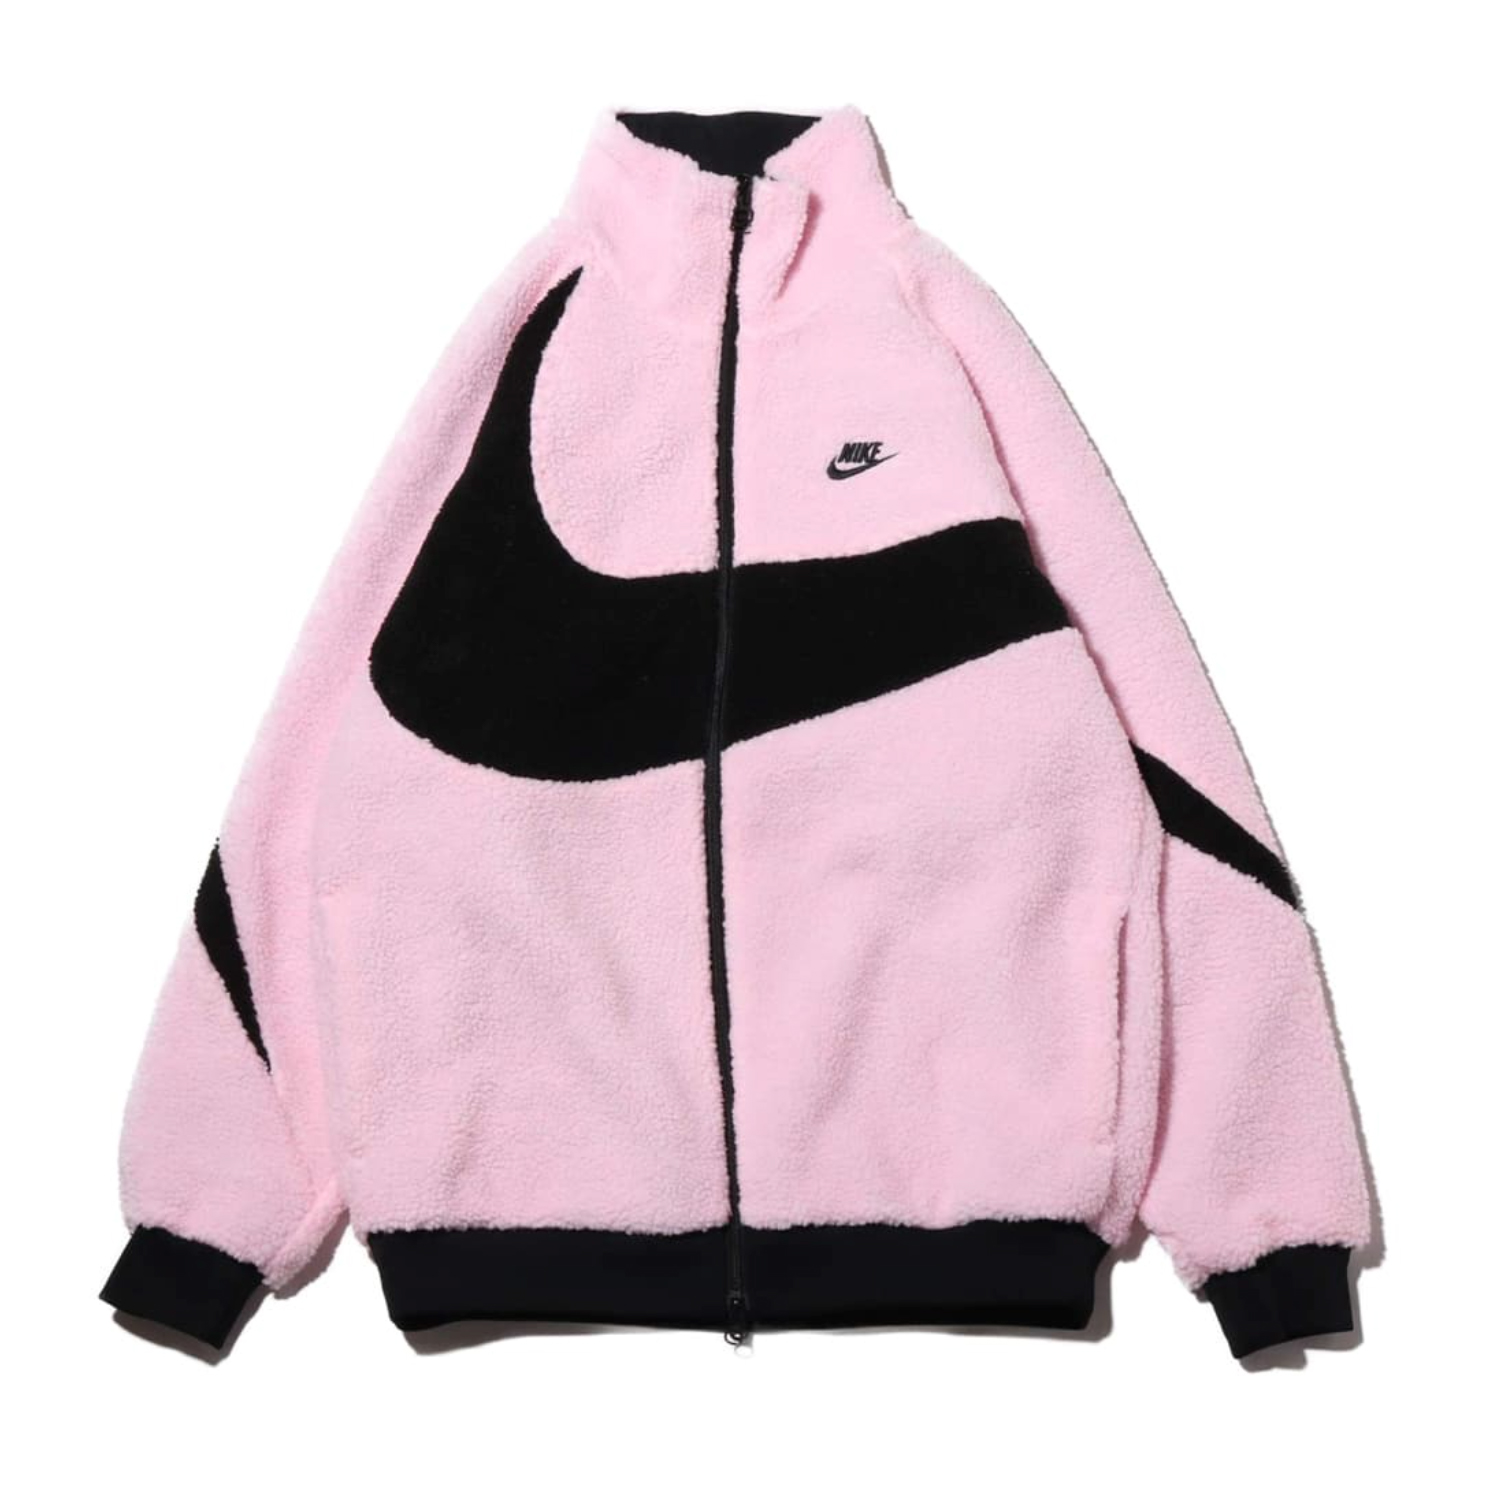 Nike Big Swoosh Reversible Boa Jacket (Asia Sizing) Prism Pink Black - FW21  - US